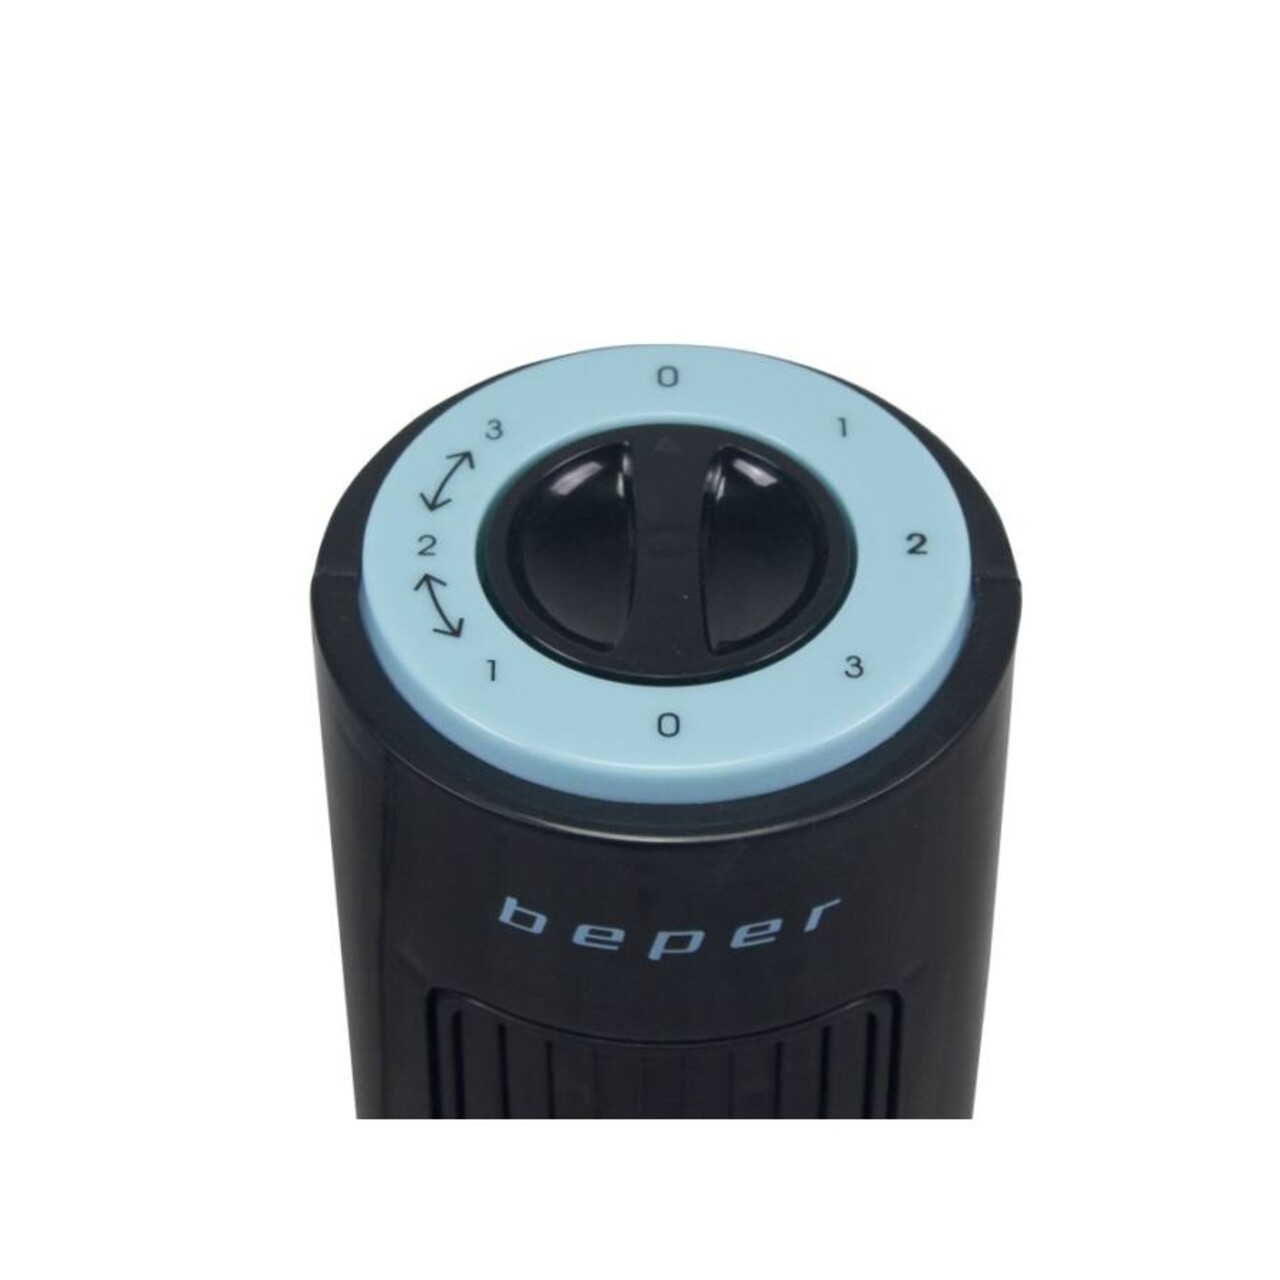 Ventilator Turn P206VEN300, Beper, 40 W, 3 Viteze Selectabile